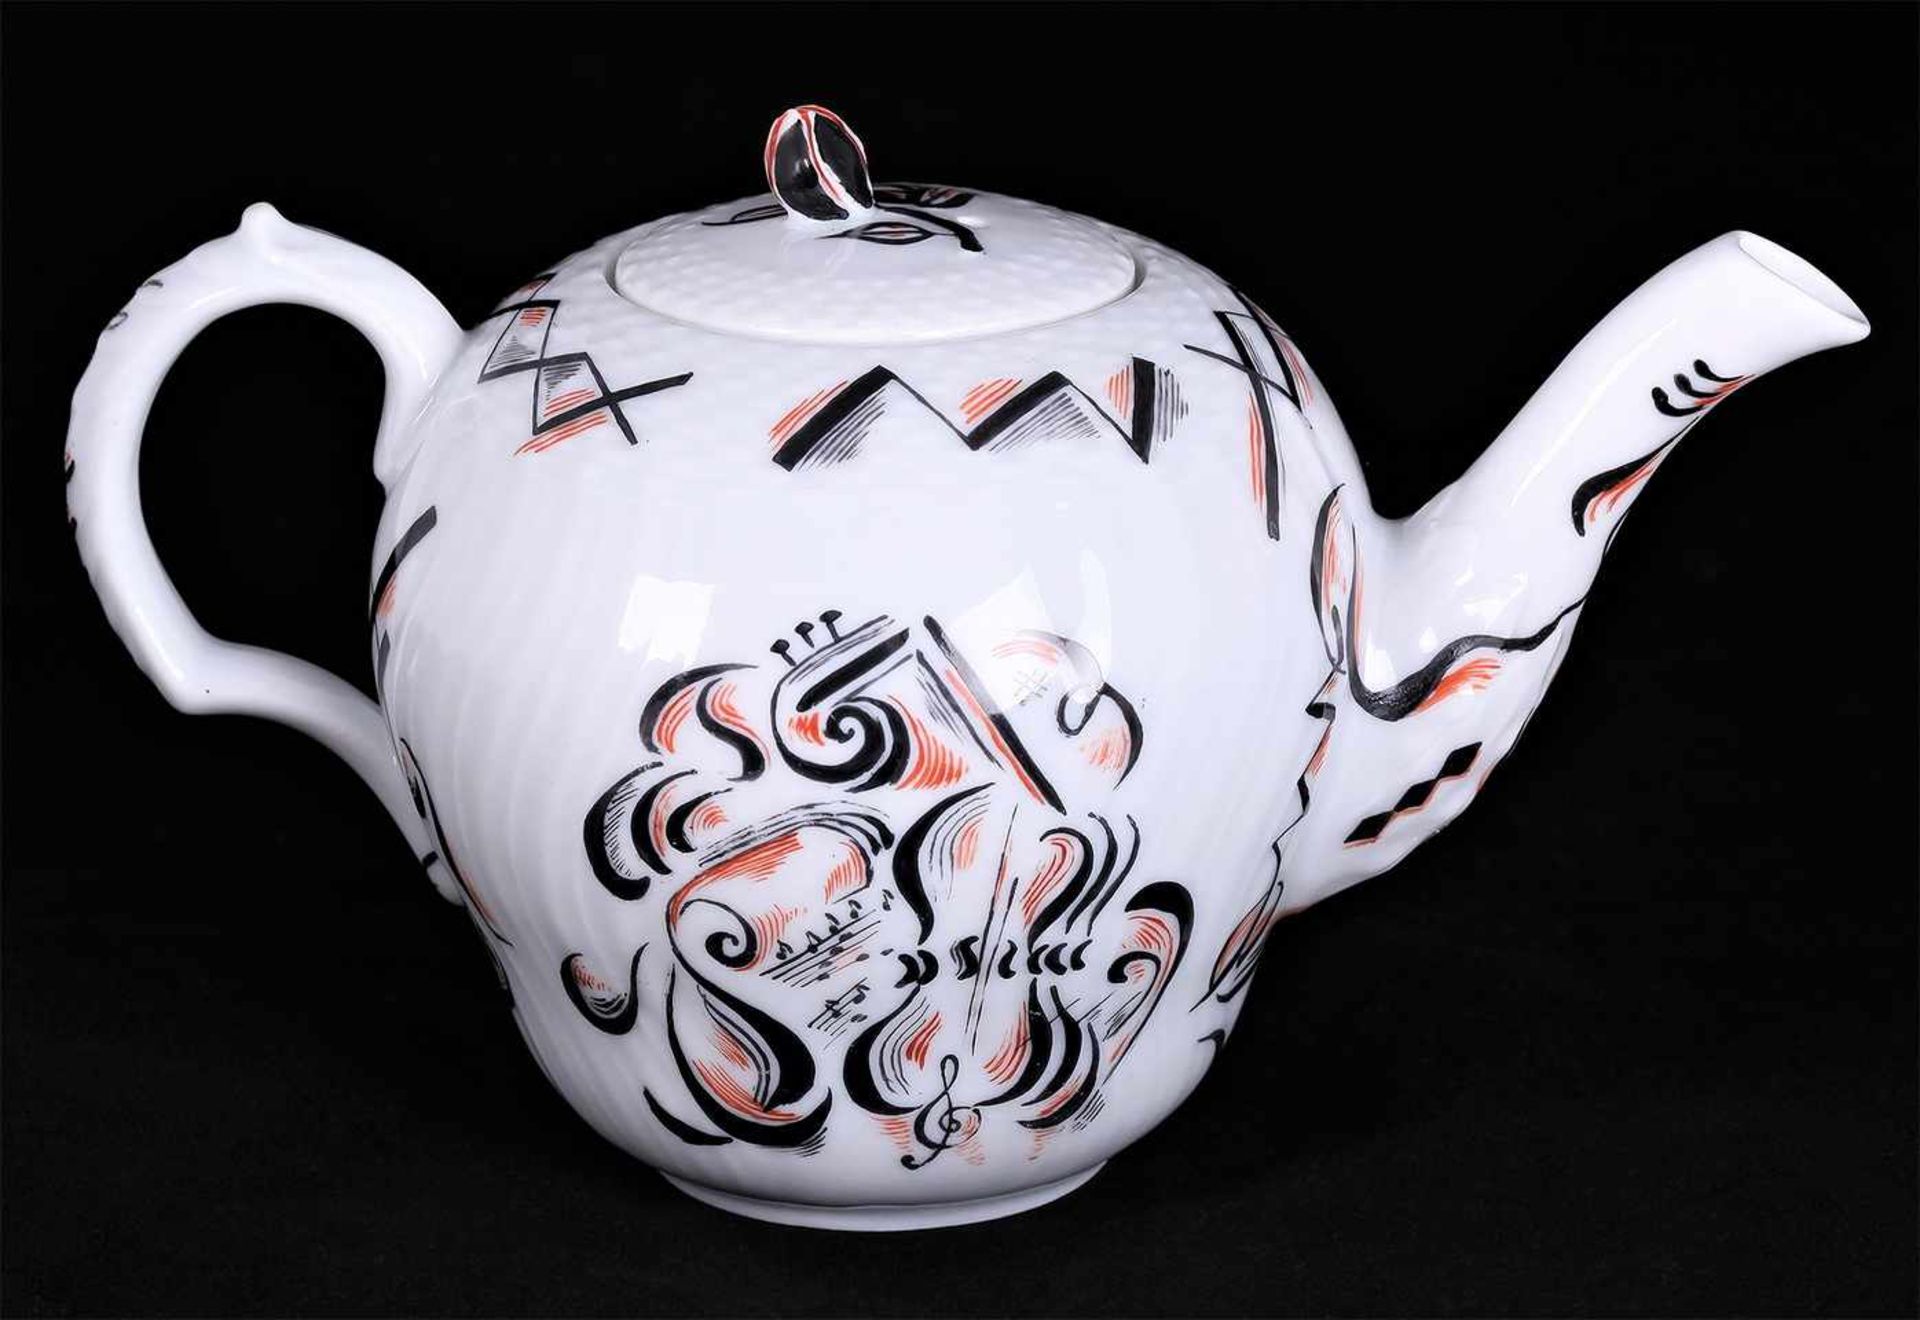 Soviet teapot. State Porcelain Factory. 1923.